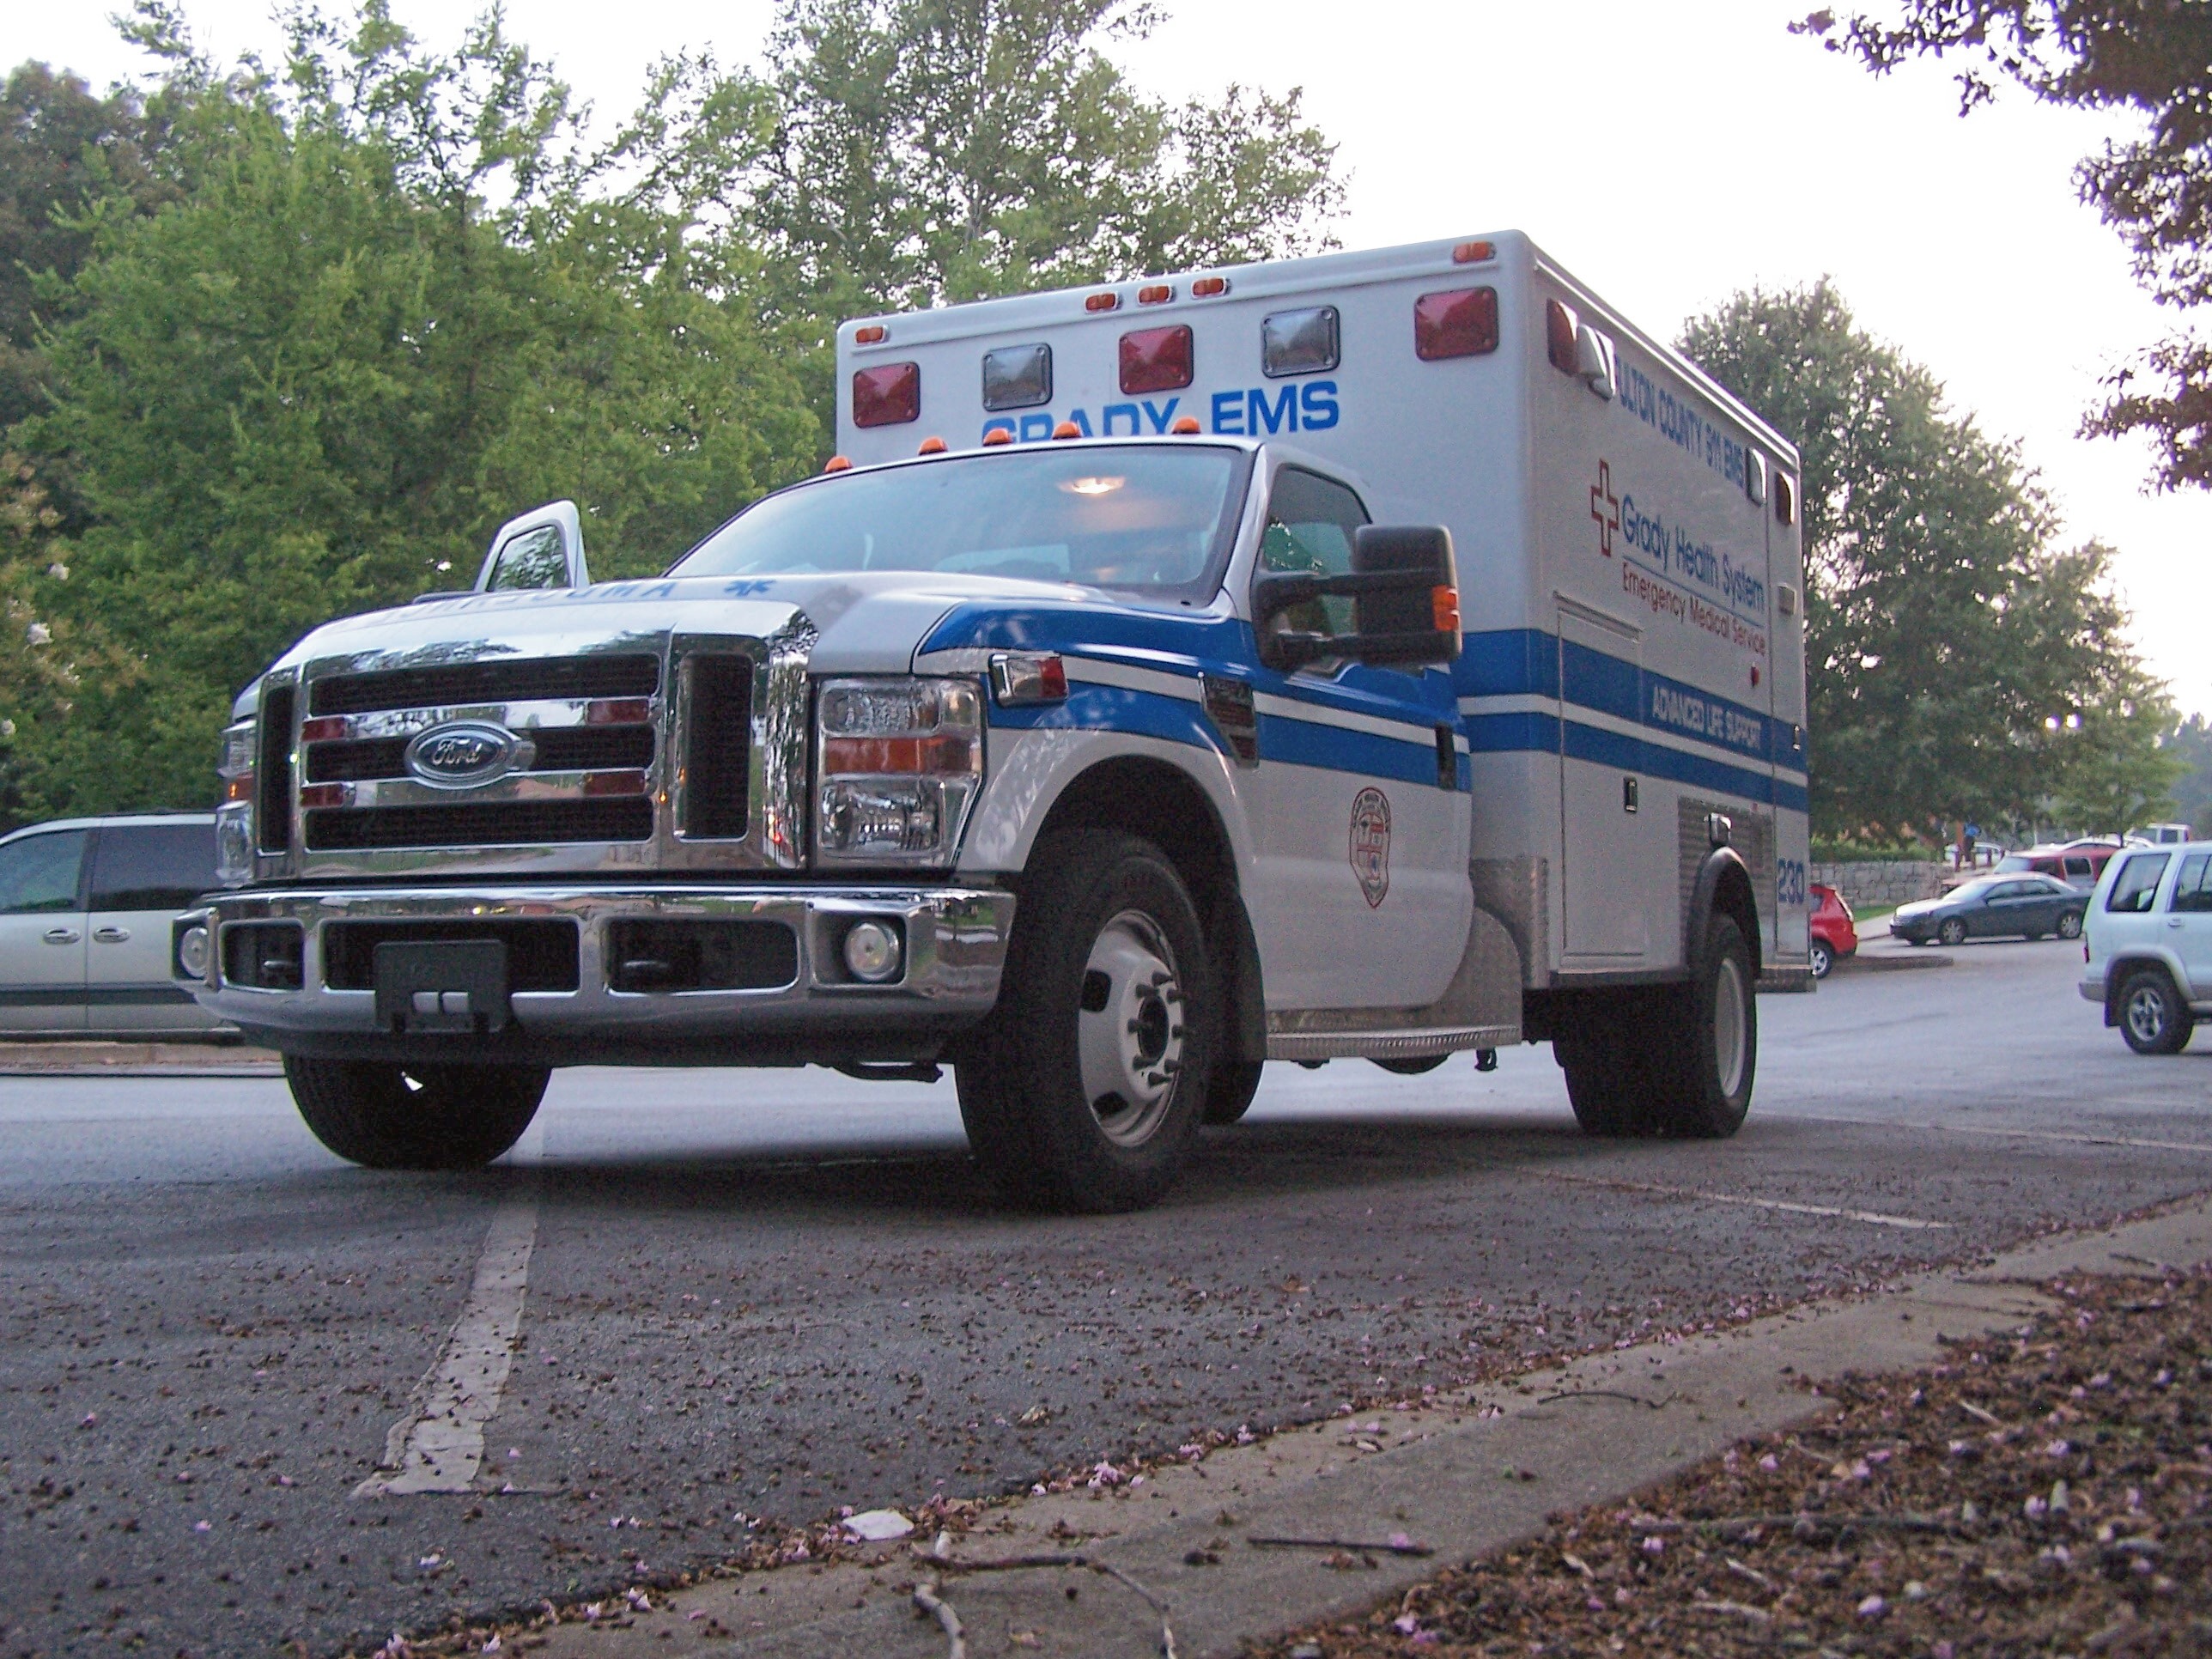 Grady_EMS_ambulance.jpg